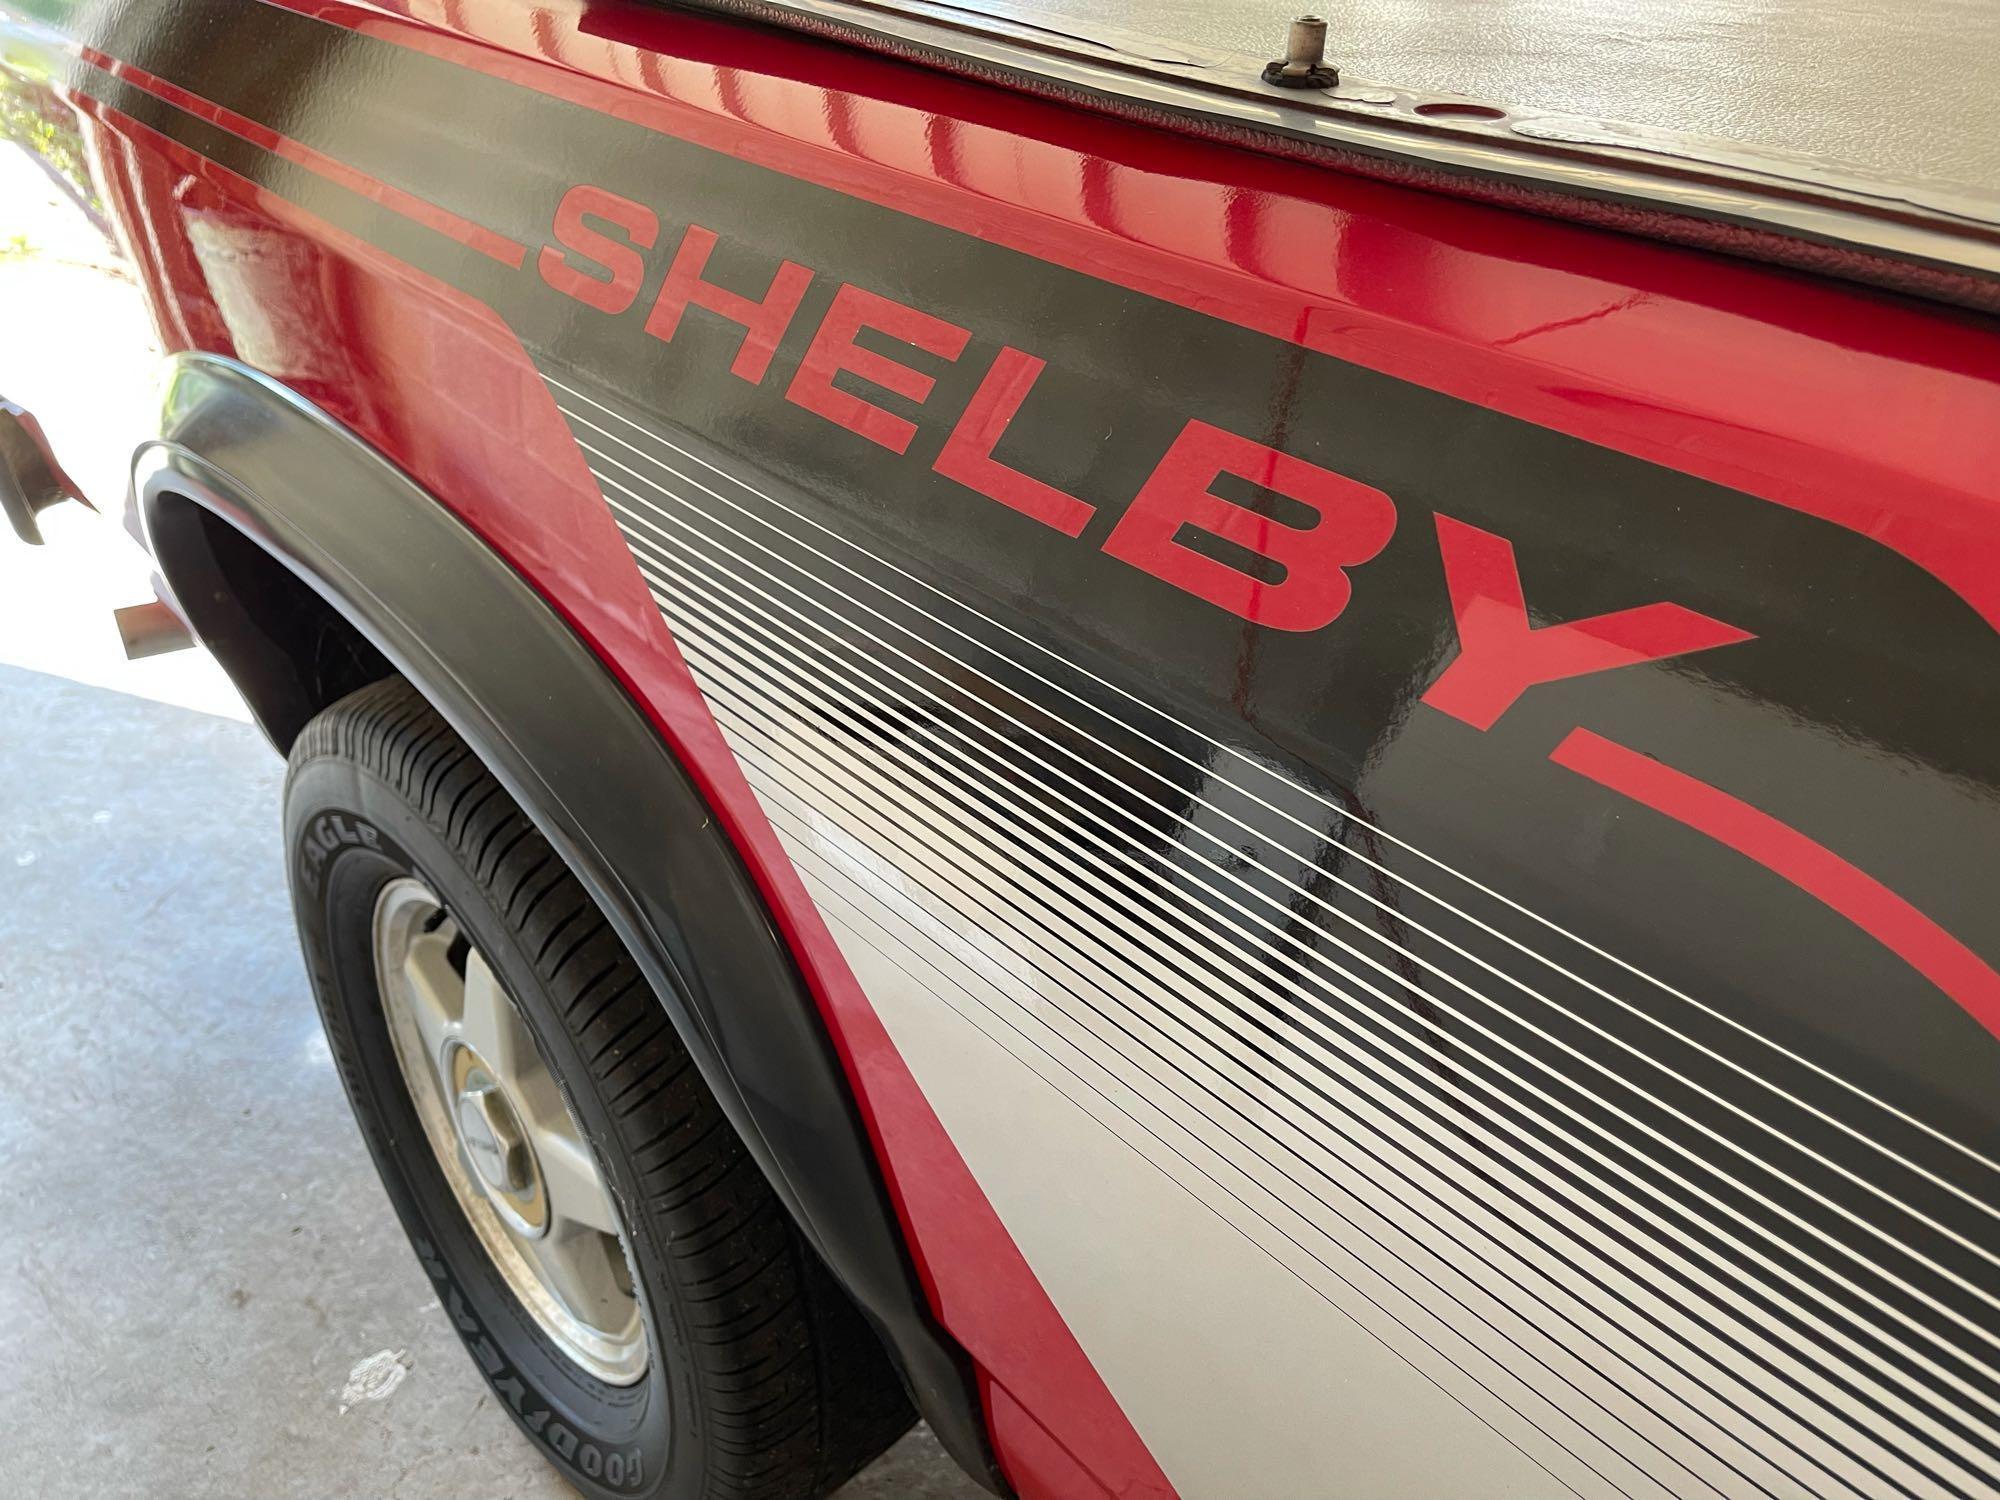 1989 Dodge Dakota Shelby truck w/408 C.I. engine, 425HP, engine like new